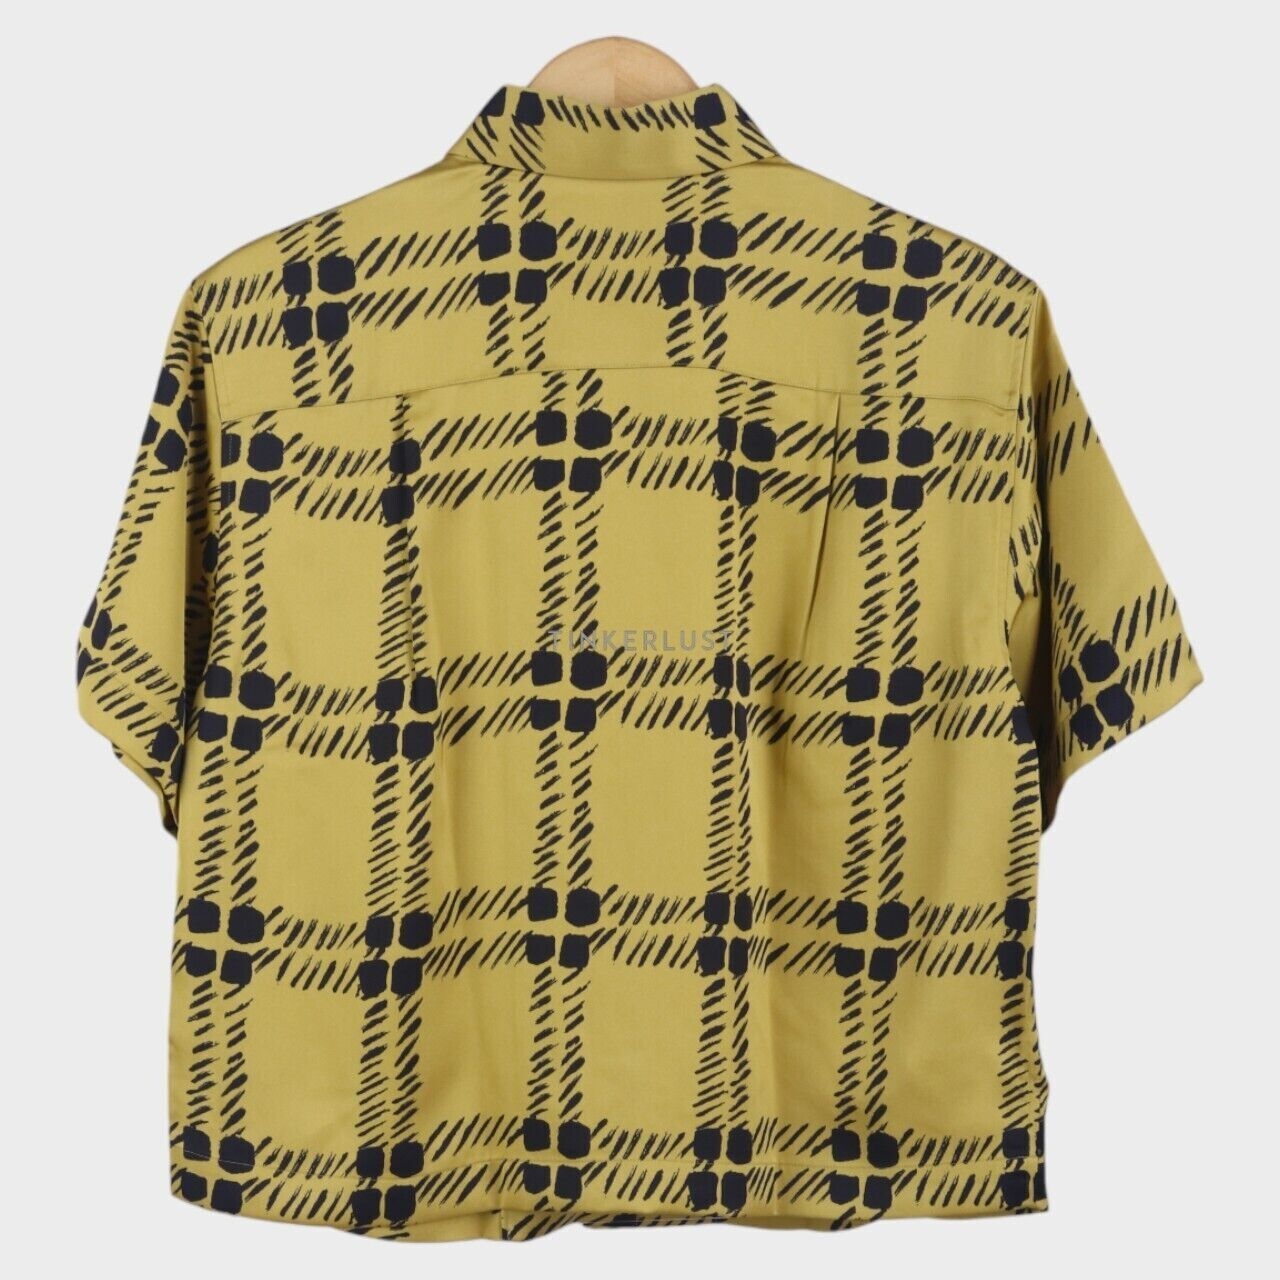 UNIQLO x Marni Mustard Shirt